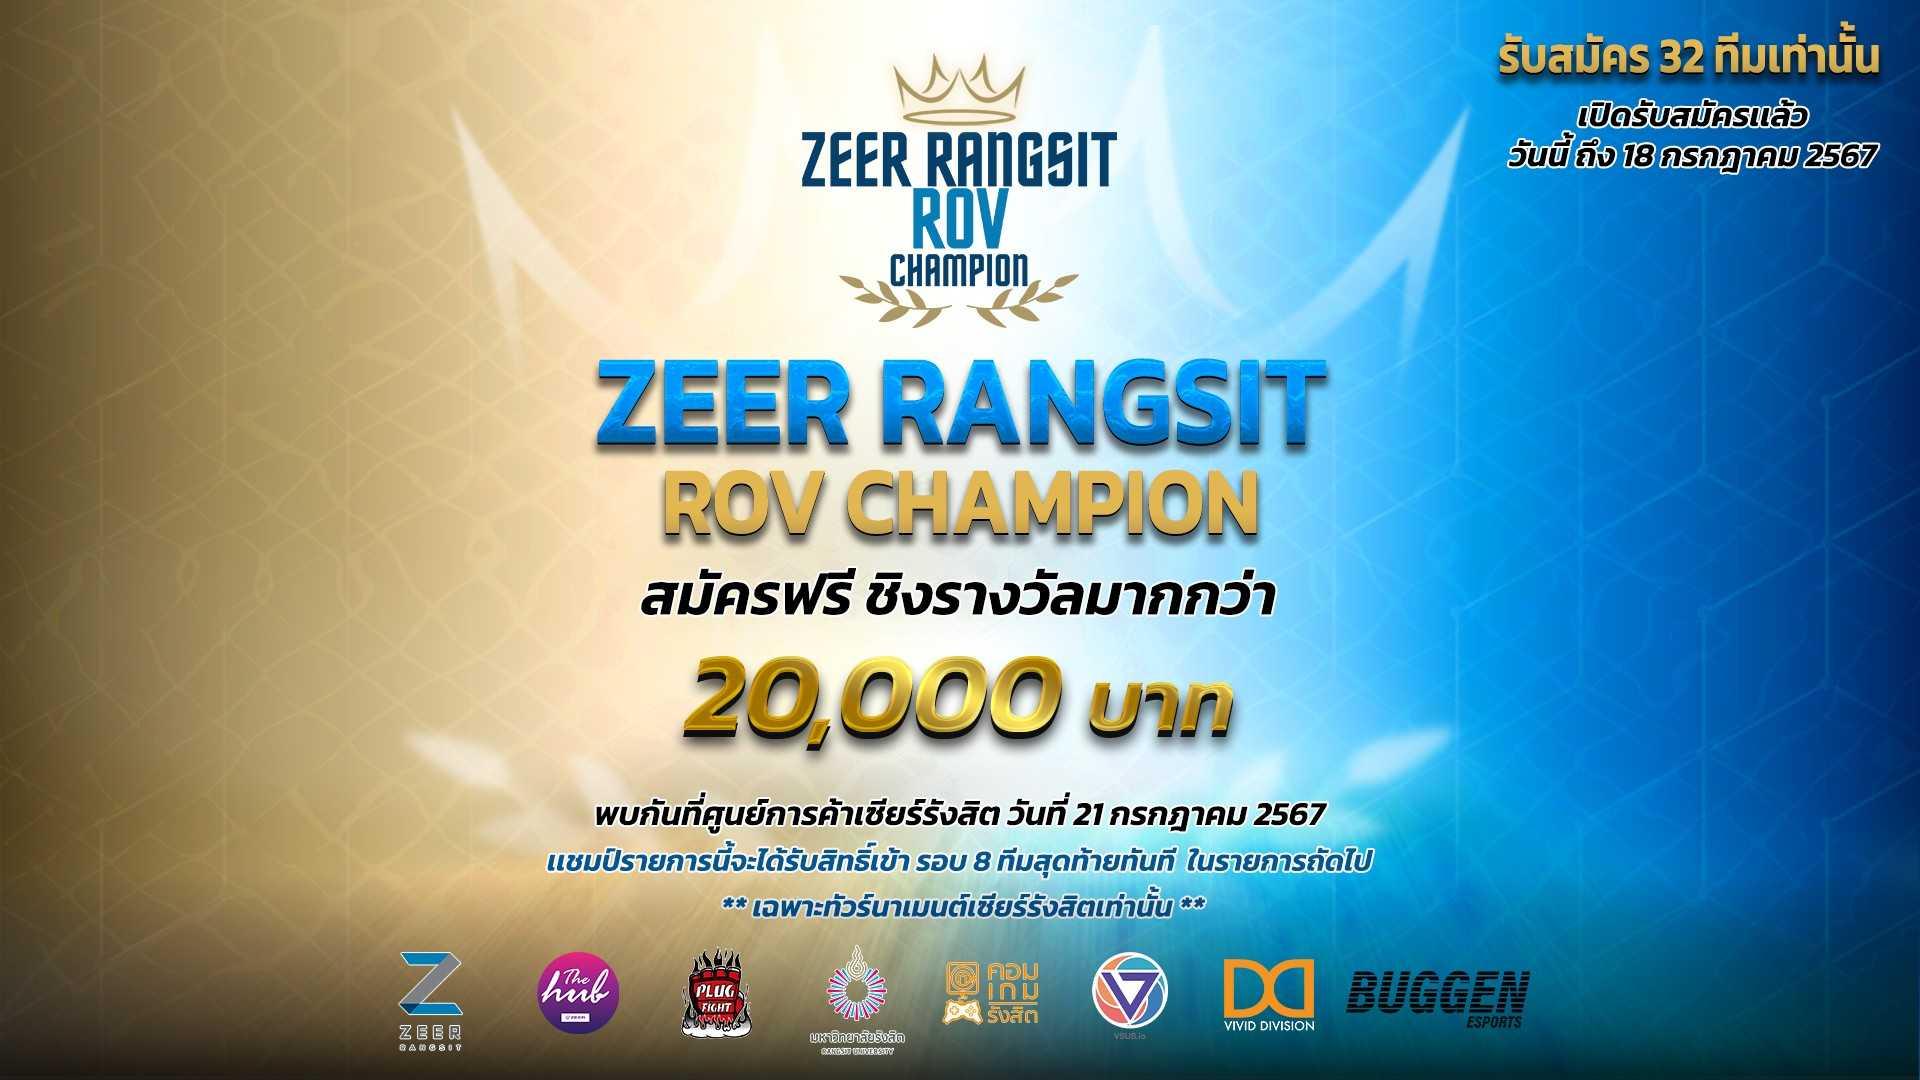 Zeer Rangsit Rov Champion !! ชิงเงินรางวัลกว่า 20,000 บาท